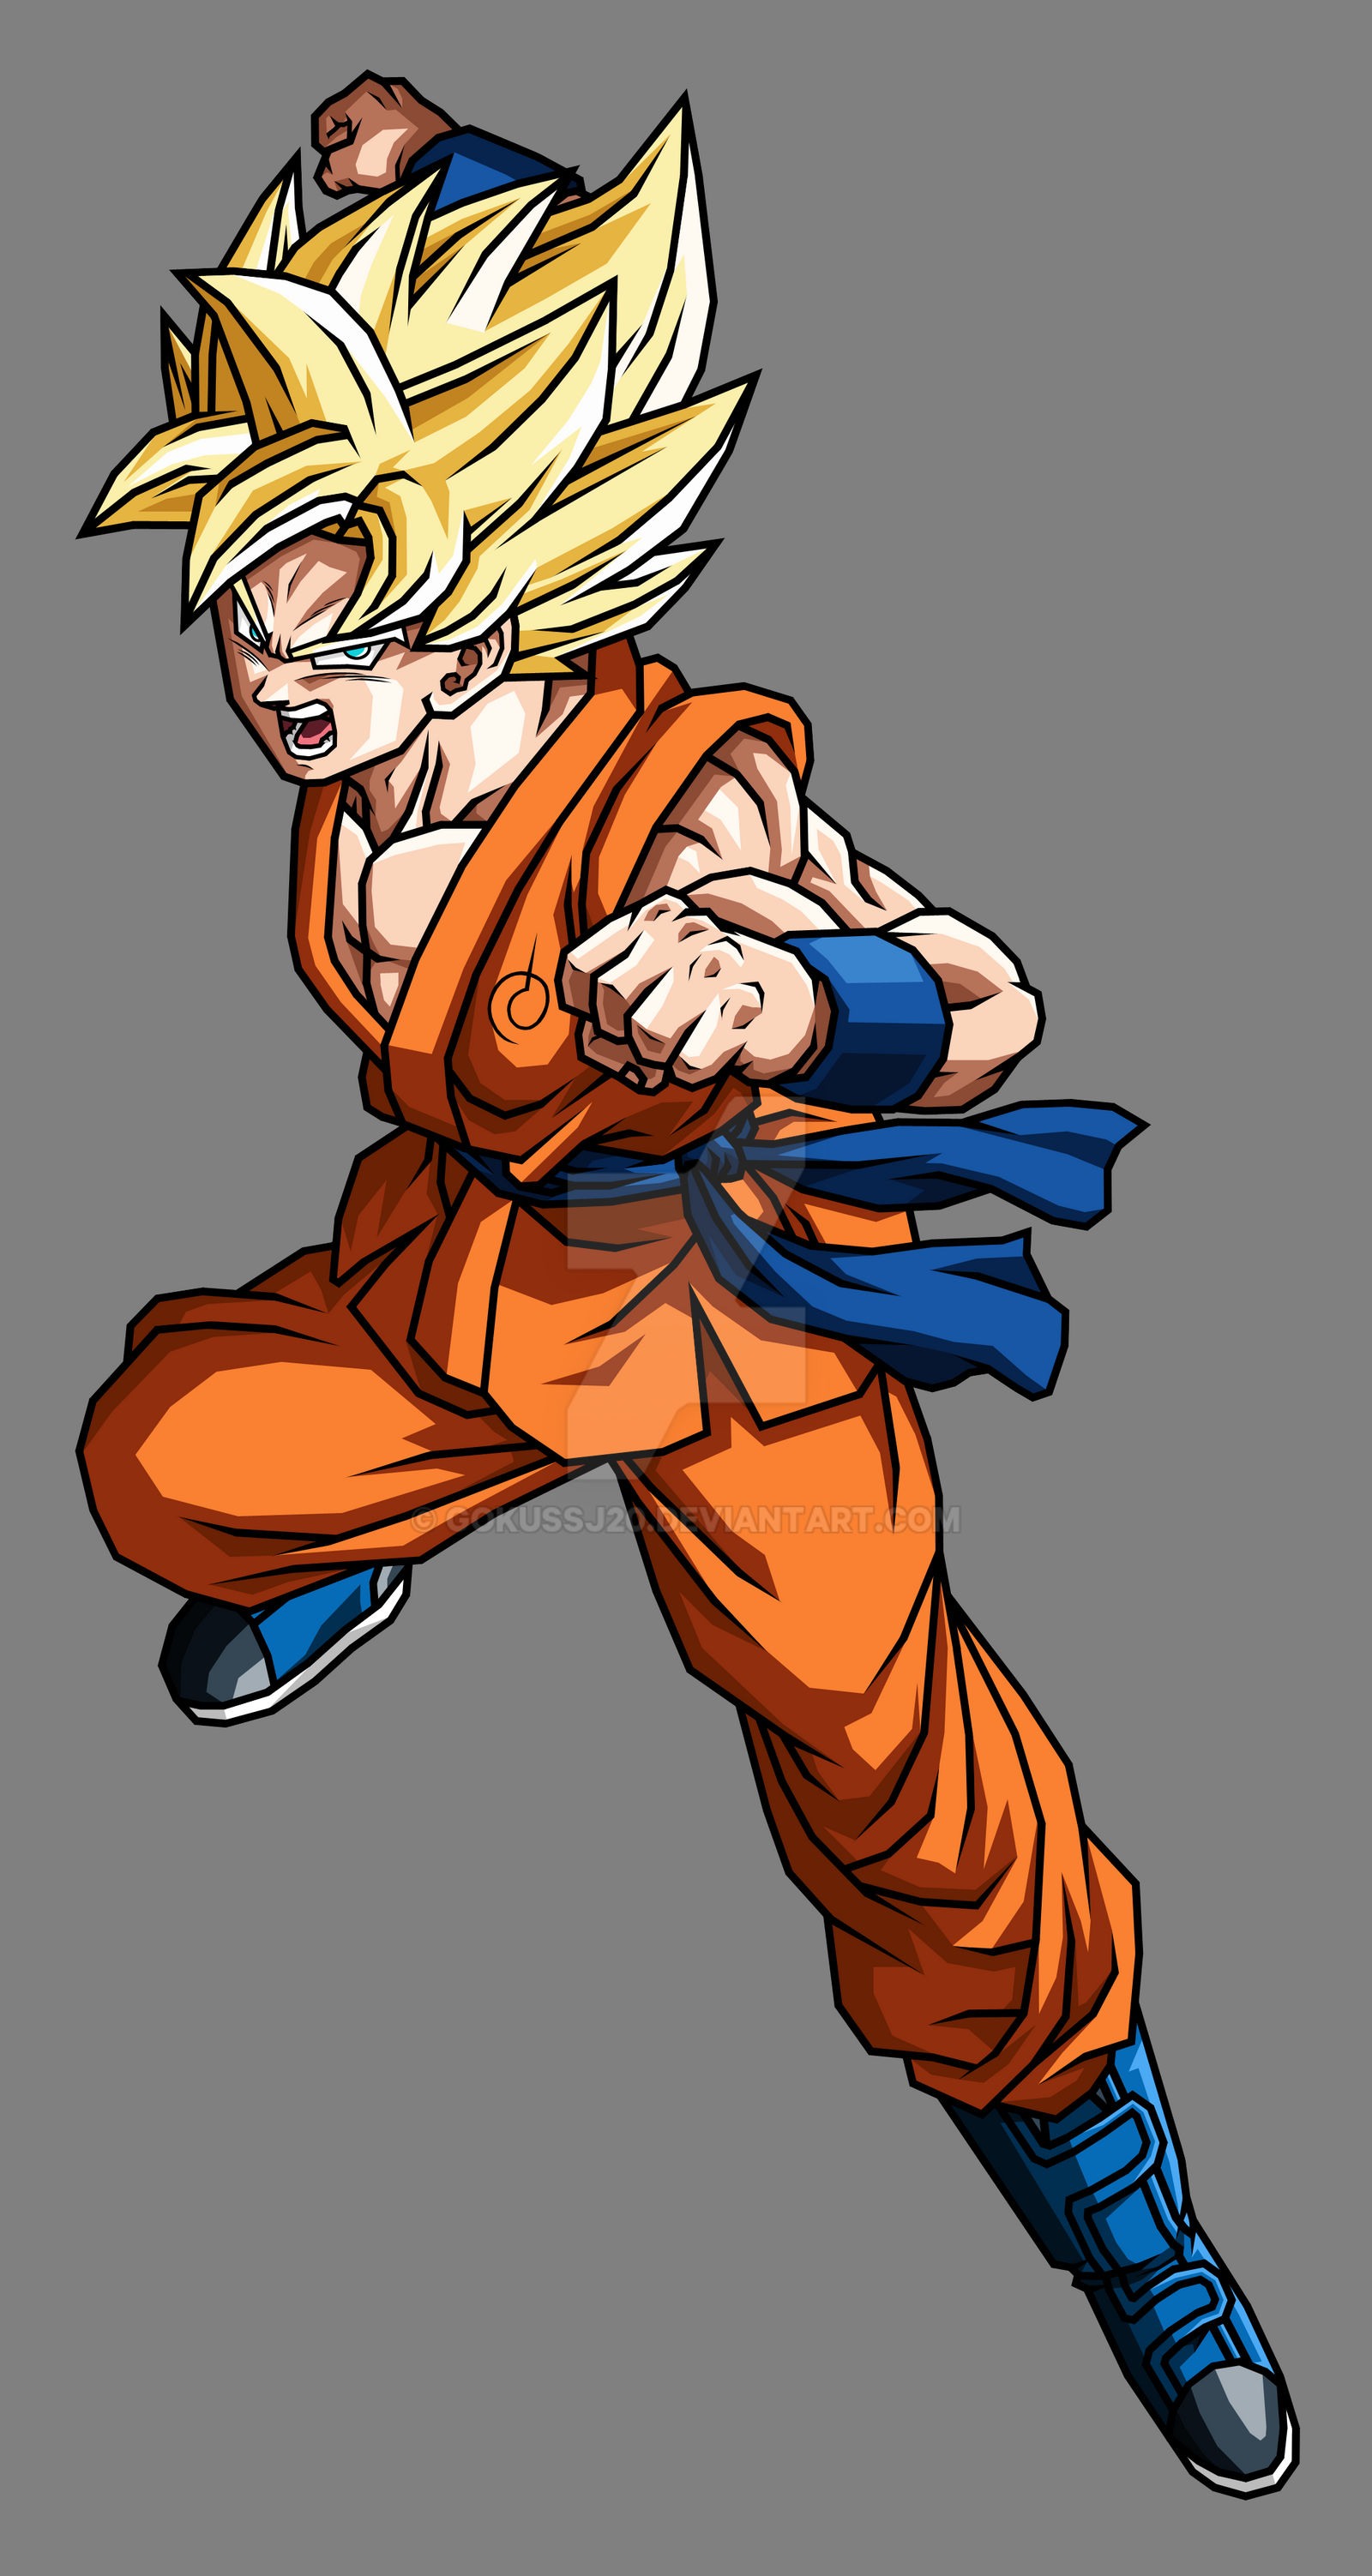 Goku Ssj1 Super by Gokussj20 on DeviantArt